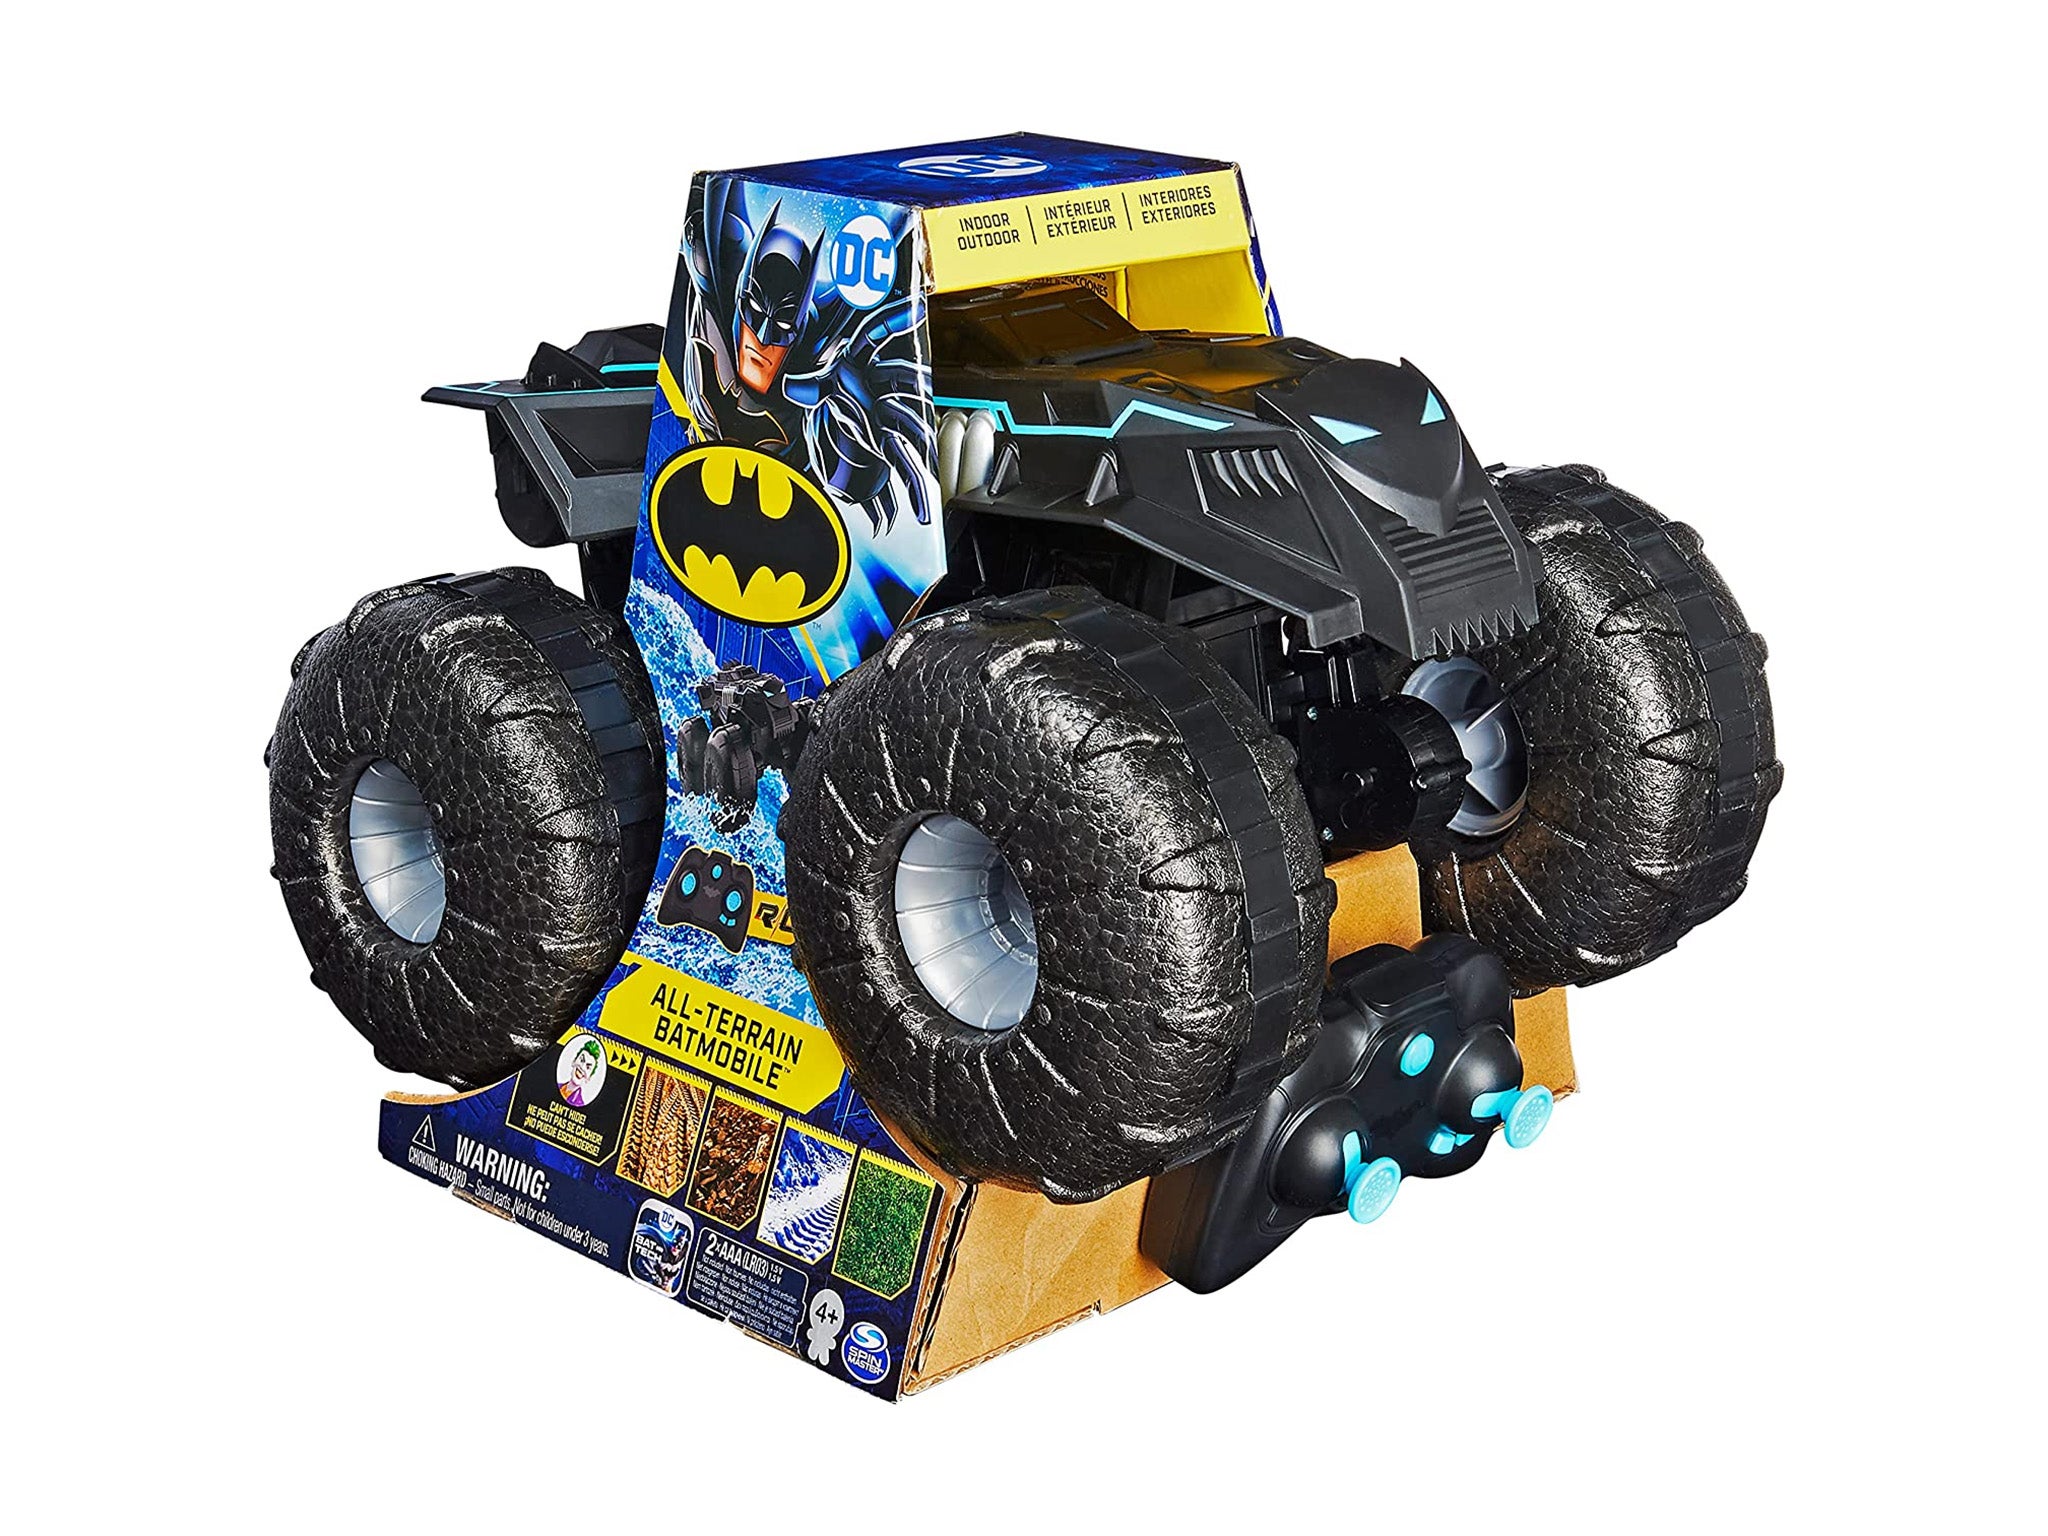 Batman all-terrain 1:15 batmobile remote control water-resistant vehicle